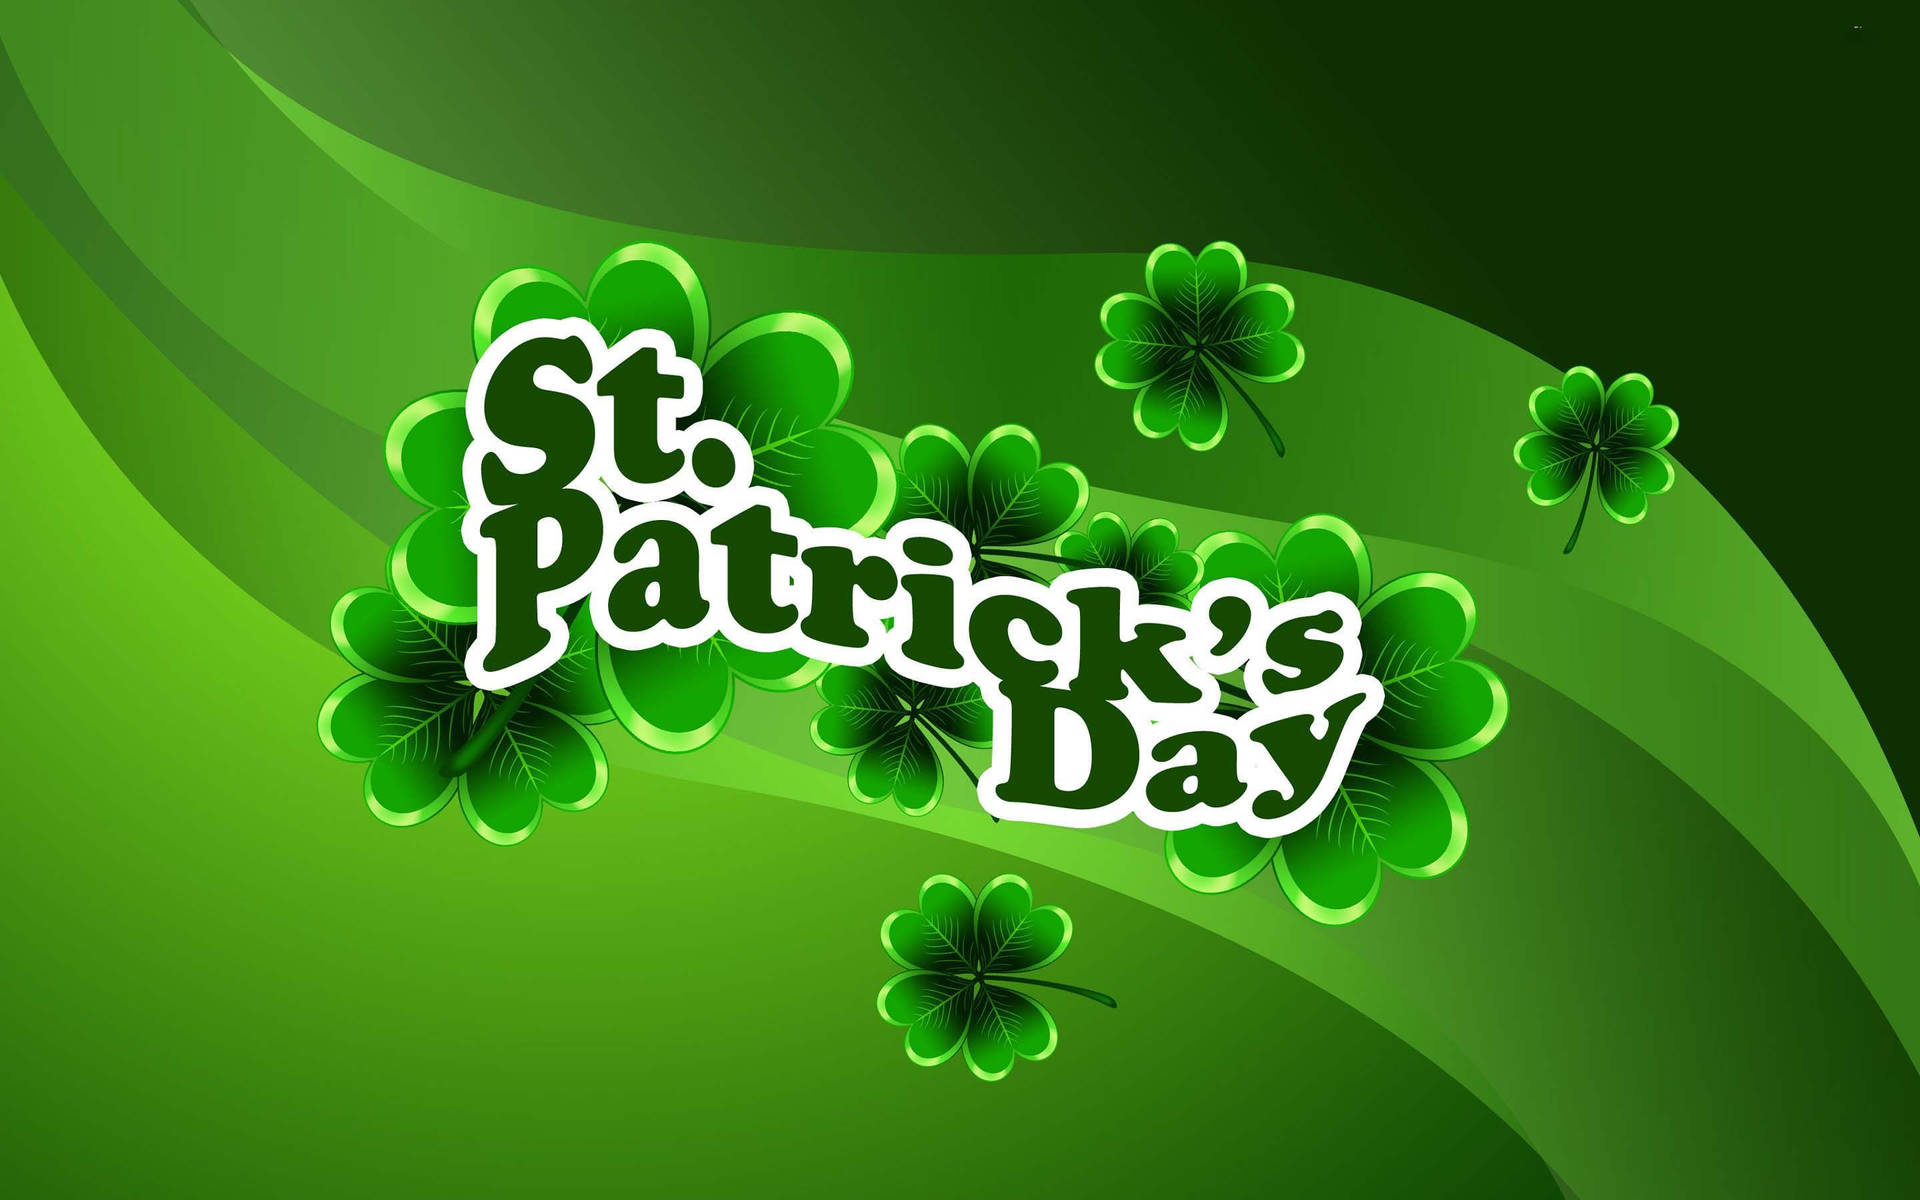 Saint Patrick’s Day Green Poster